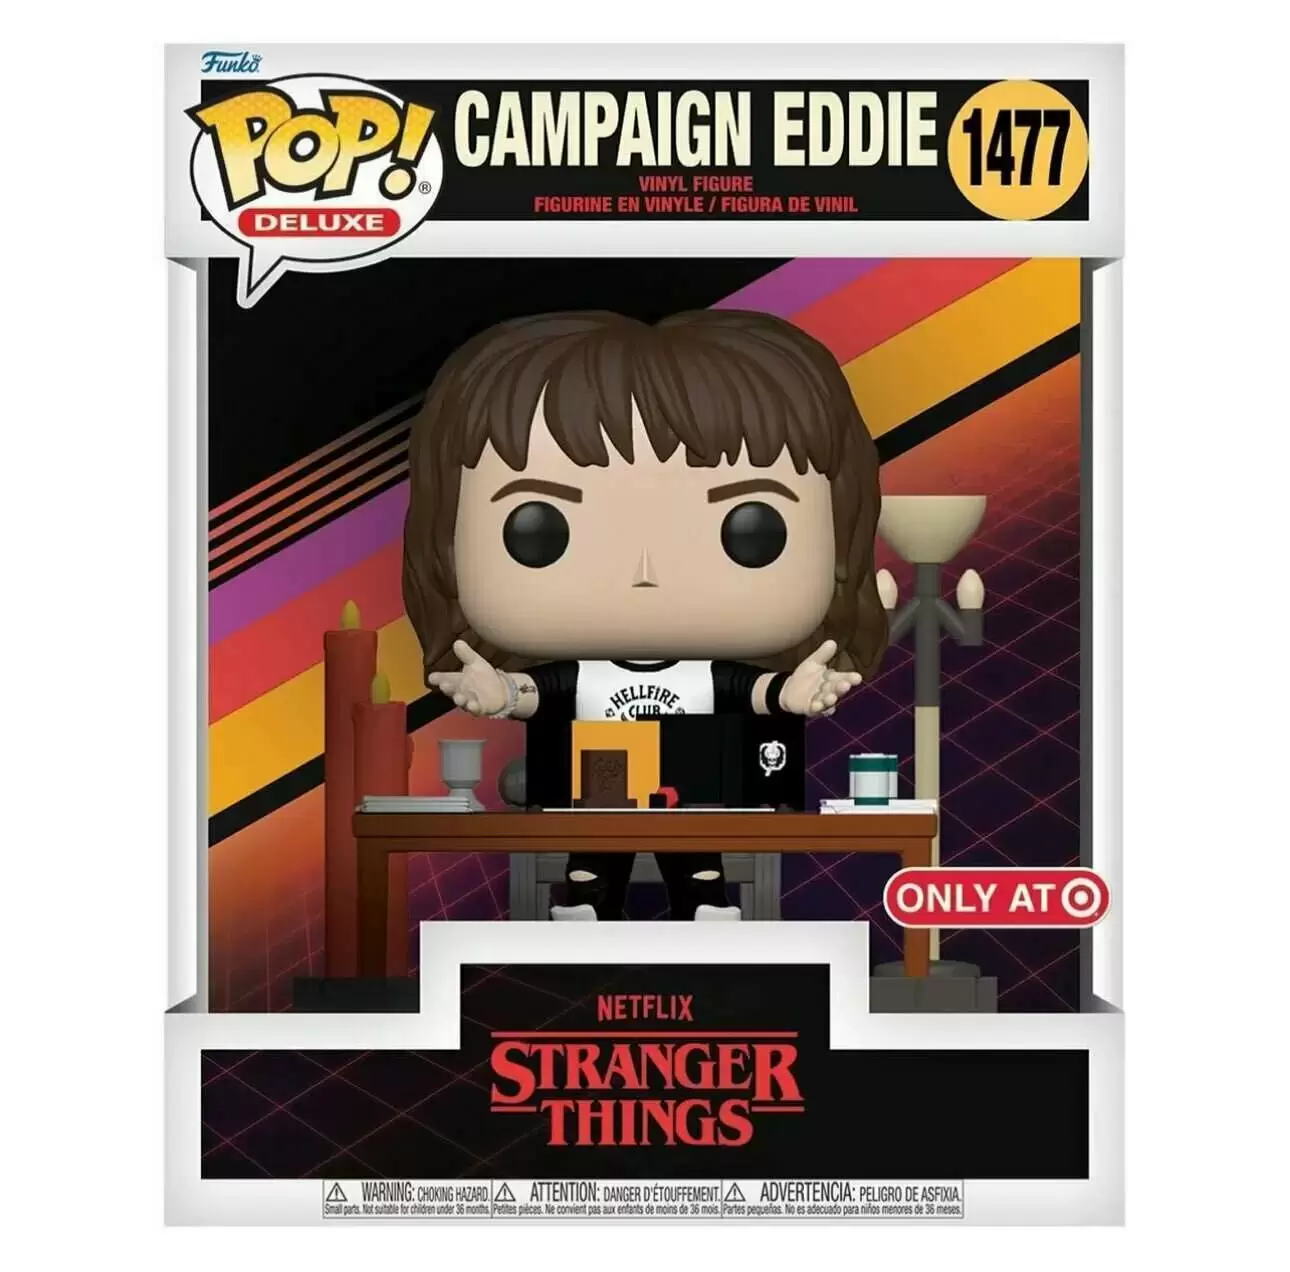 POP! Television - Stranger Things - Campaign Eddie